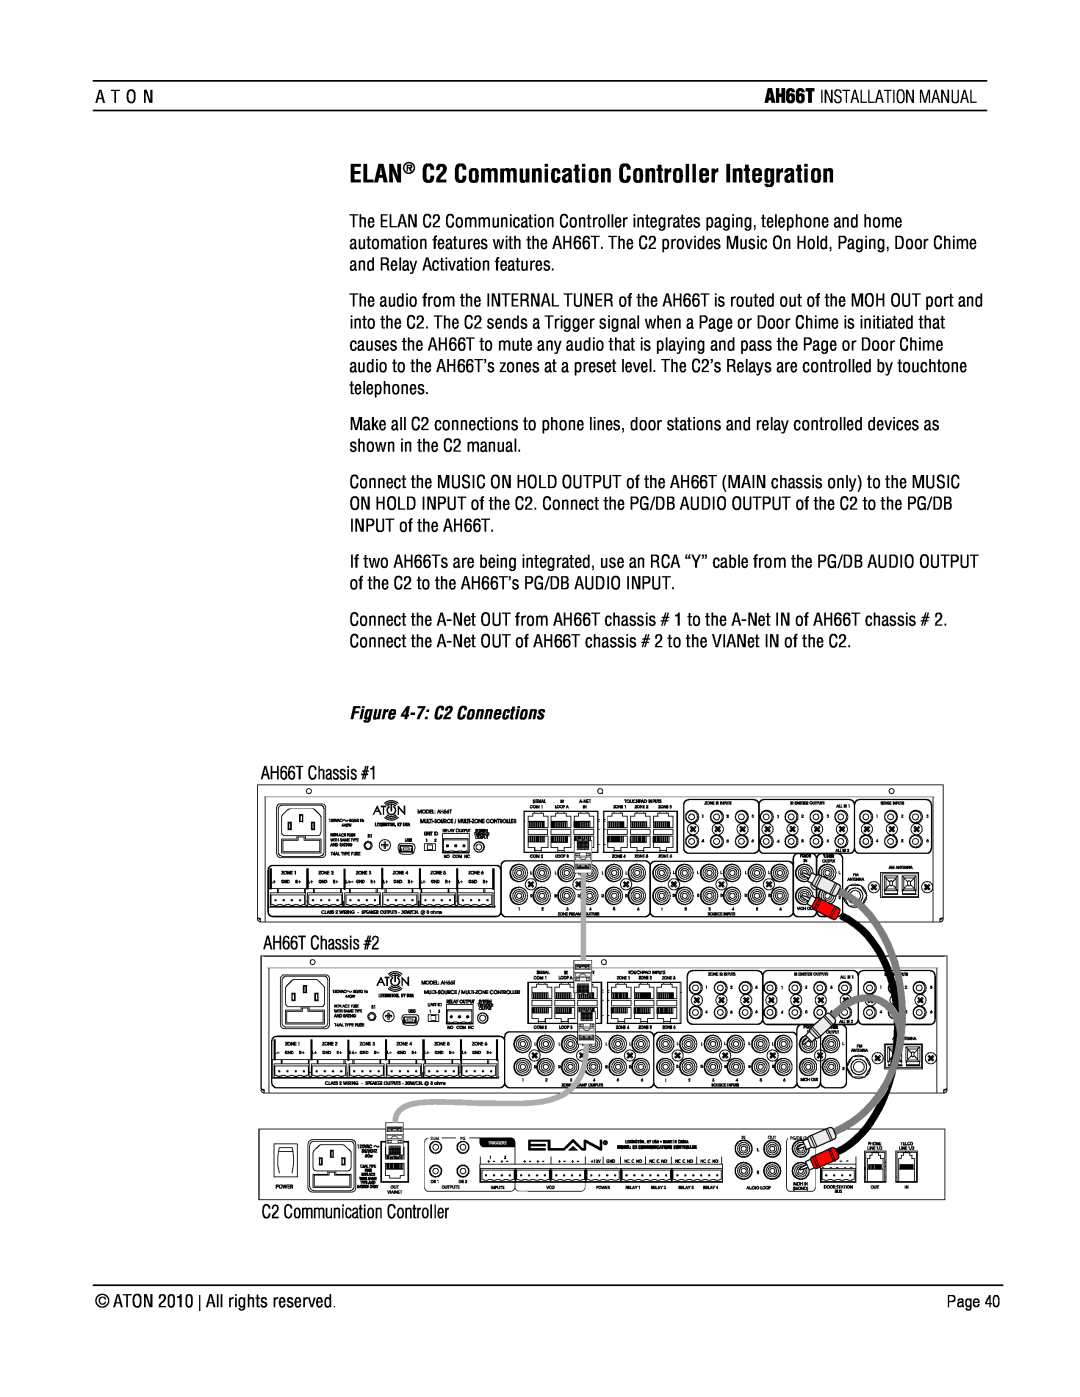 ATON AH66T-KT installation manual ELAN C2 Communication Controller Integration, 7:C2 Connections 